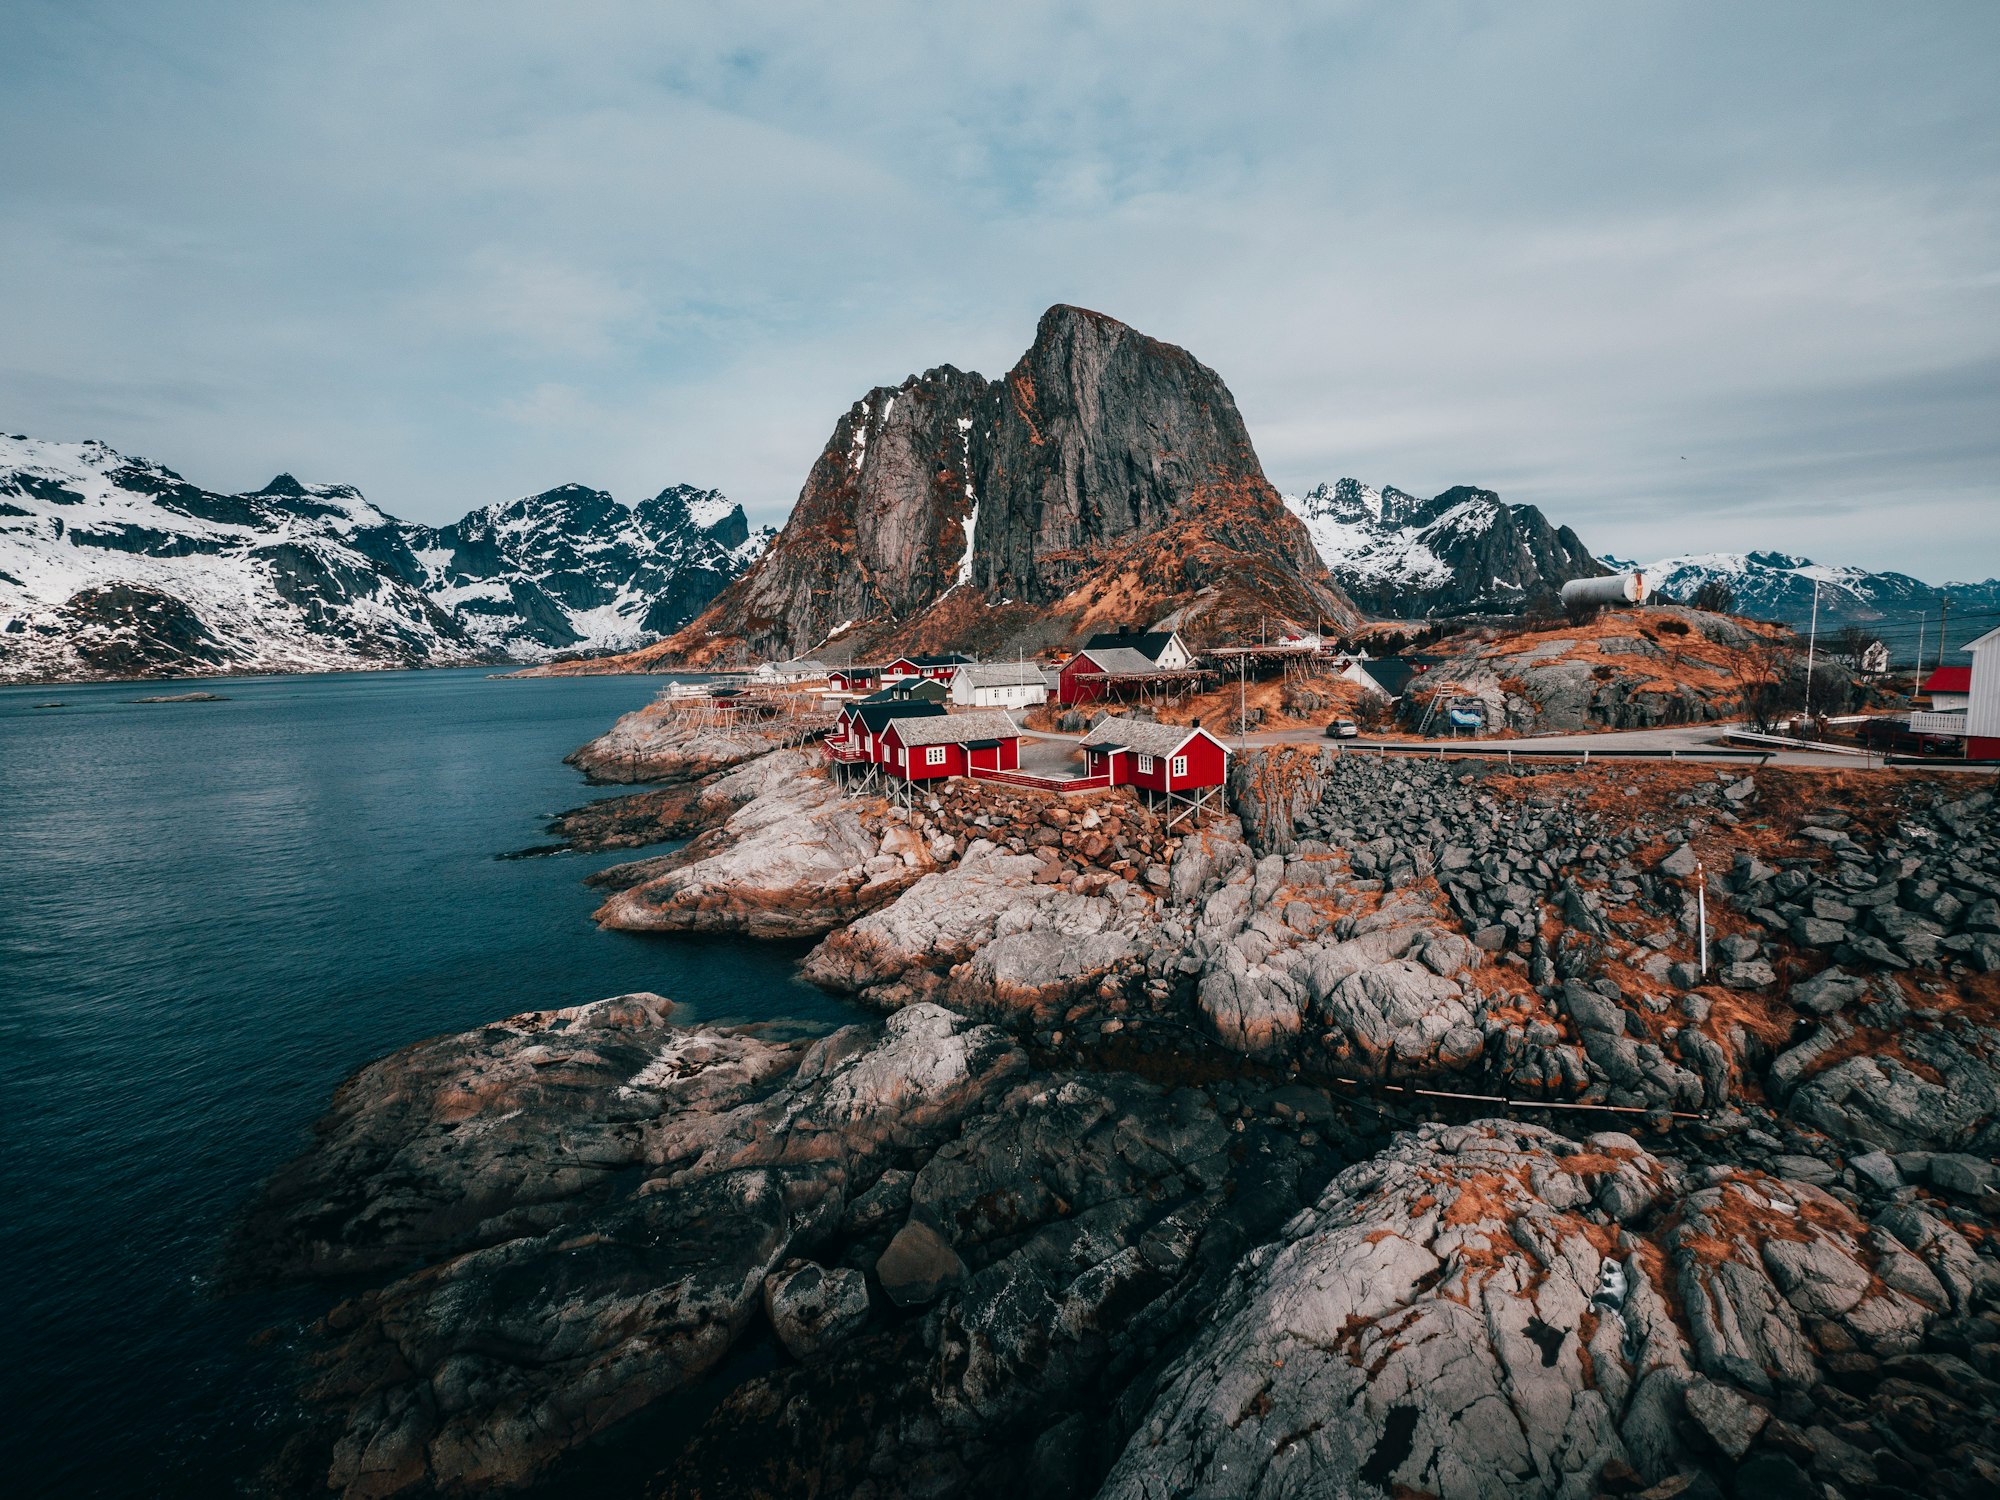 Lofoten Islands, Svolvær, Norway, Photo by John O'Nolan / Unsplash